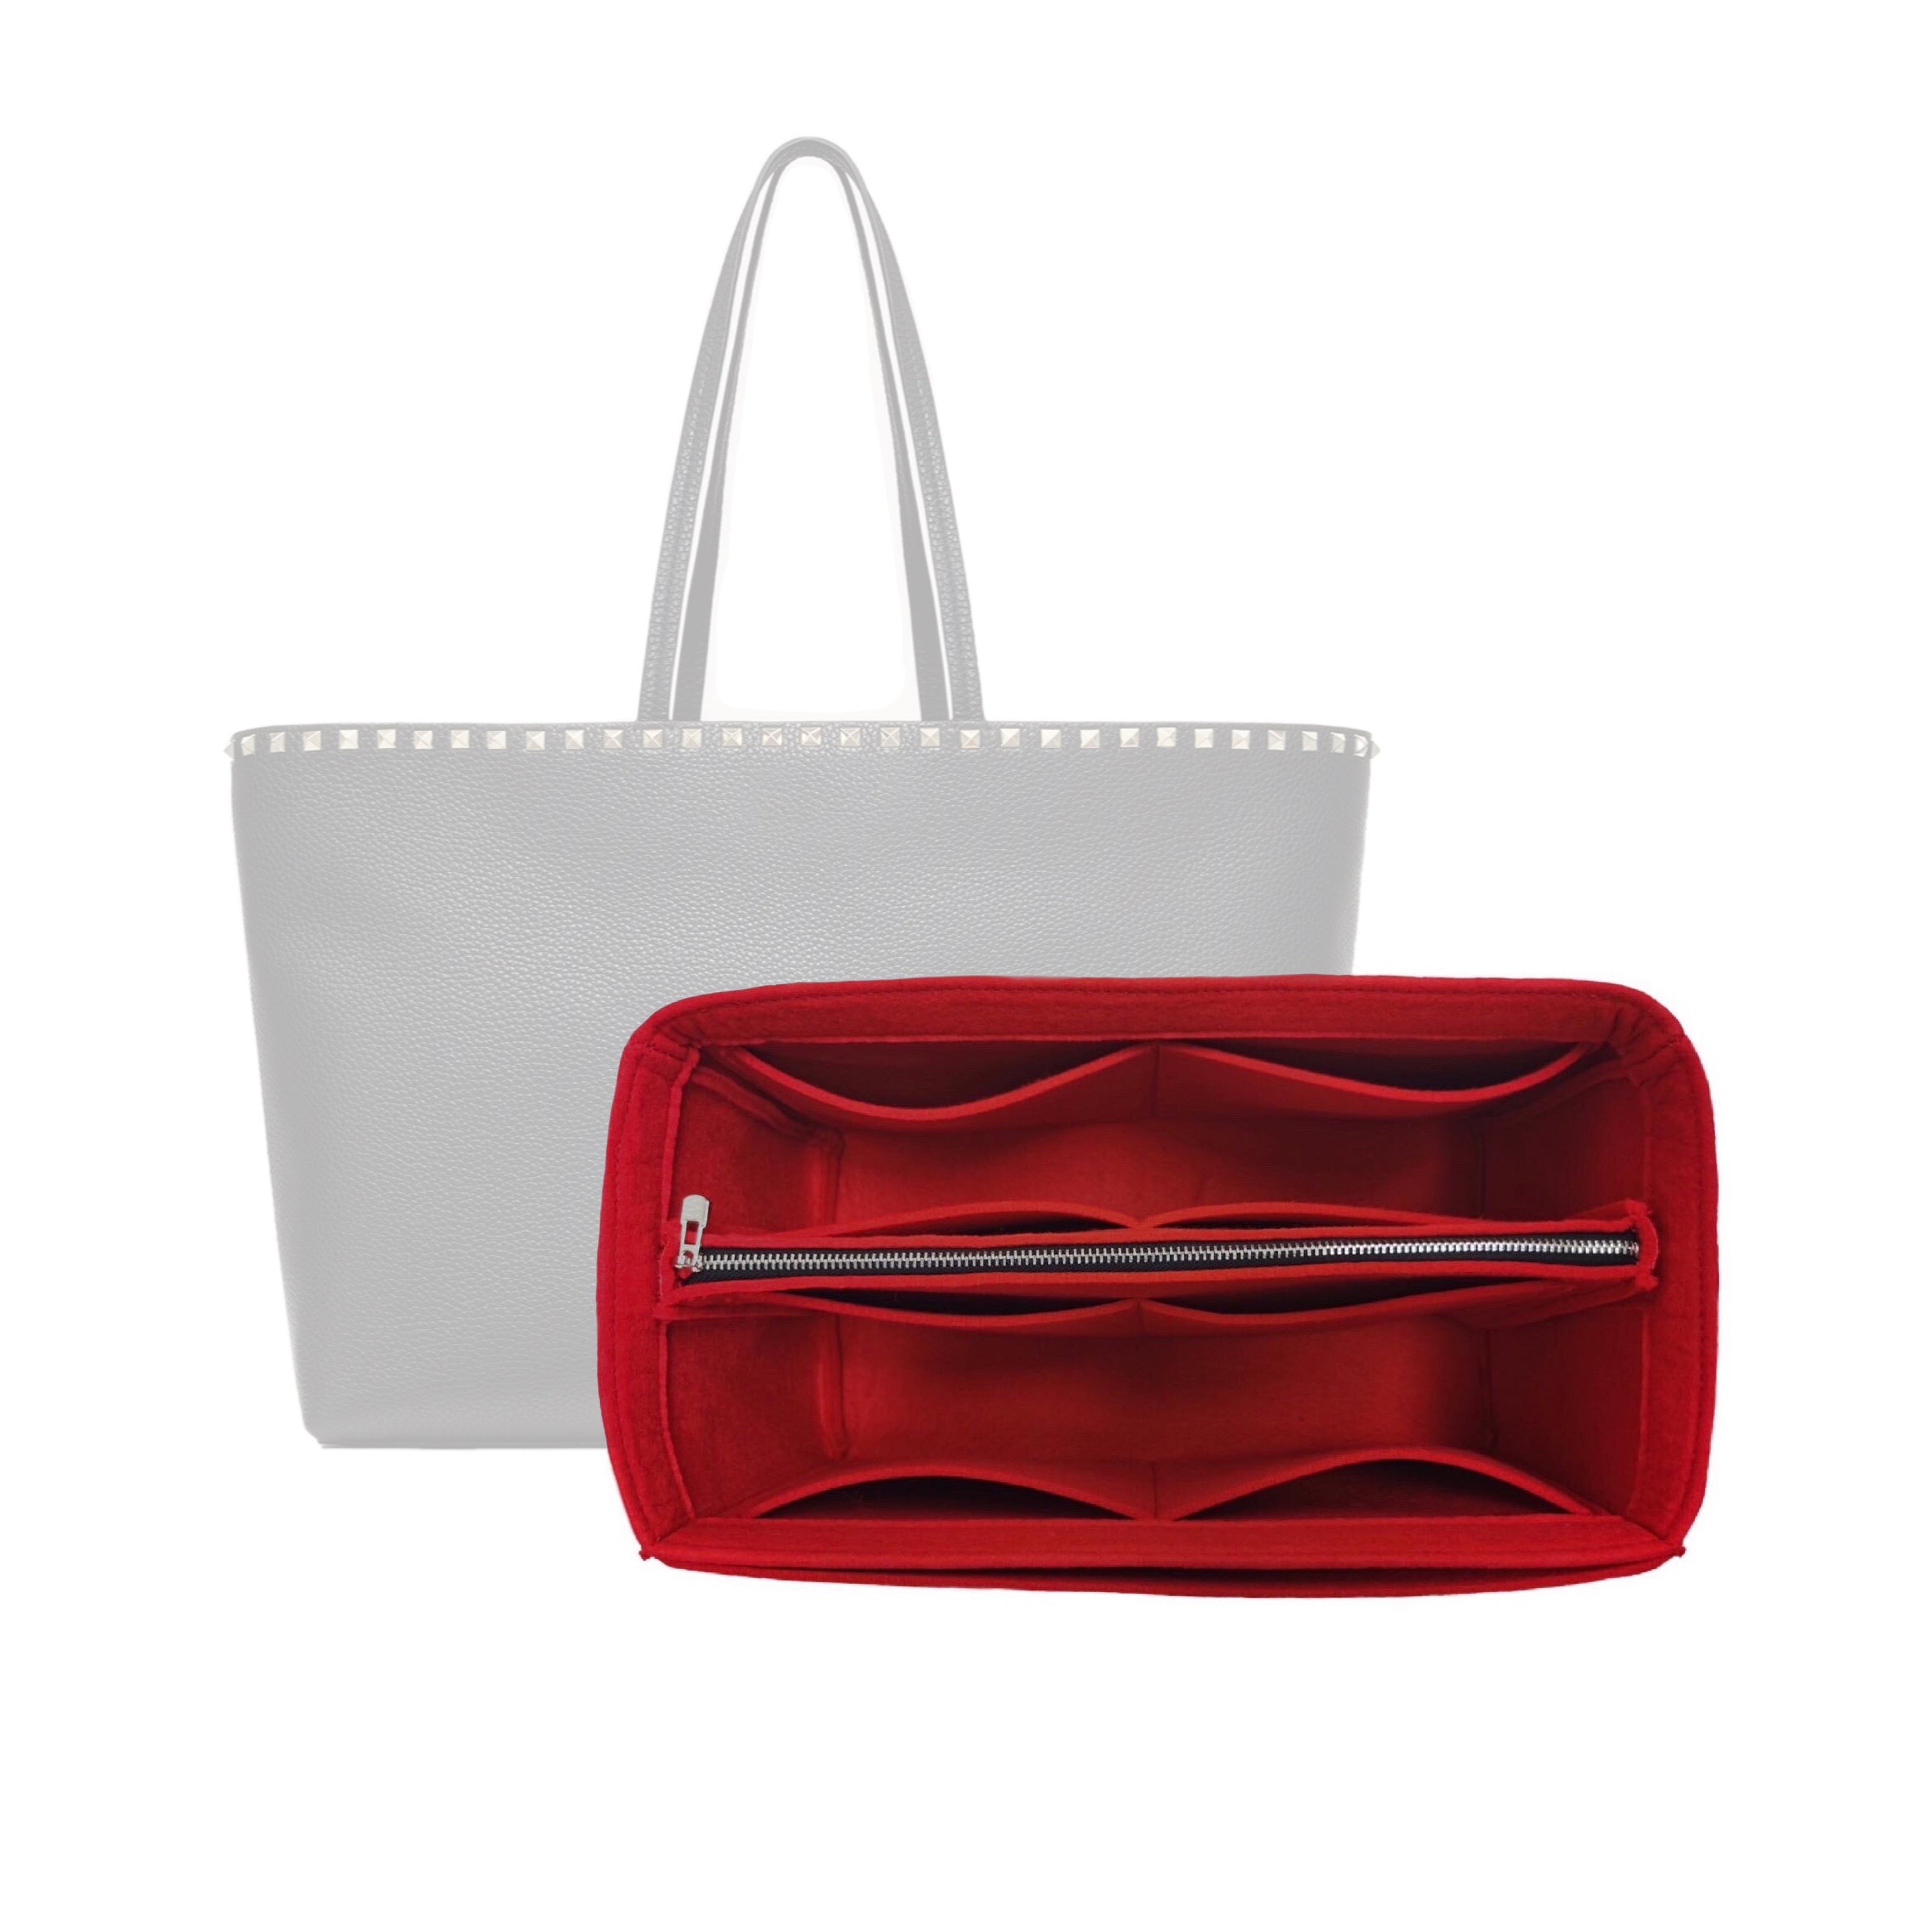 BaginBag | Handbag Organizer For Valentino Shopping Tote Bag| Designer Purse Insert  | Bag Liner | Bag Insert Organizer | Tote bag organizer  | Bag Organizer | Luxury bag |  Bag protector | Organizer inserts for handbags